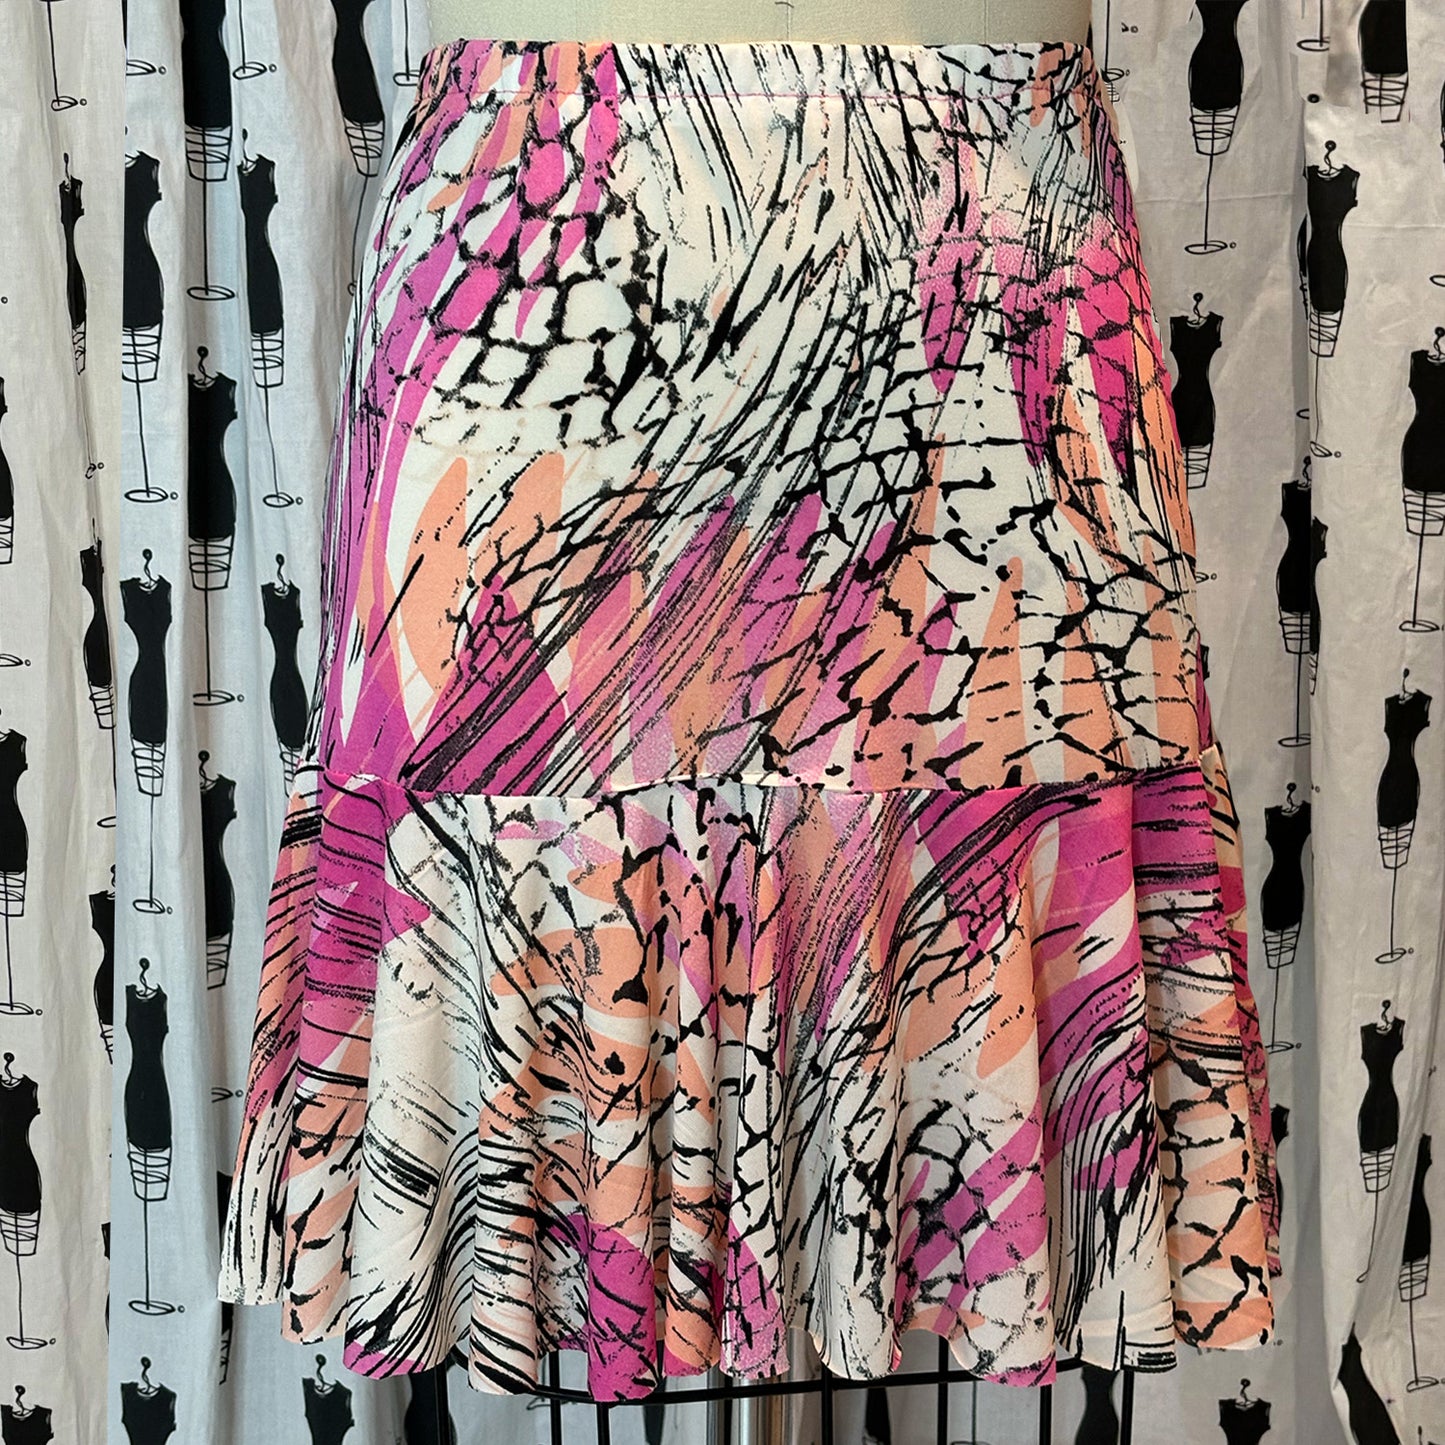 Sewing Kit -Leila Skirt Pattern + Fabric